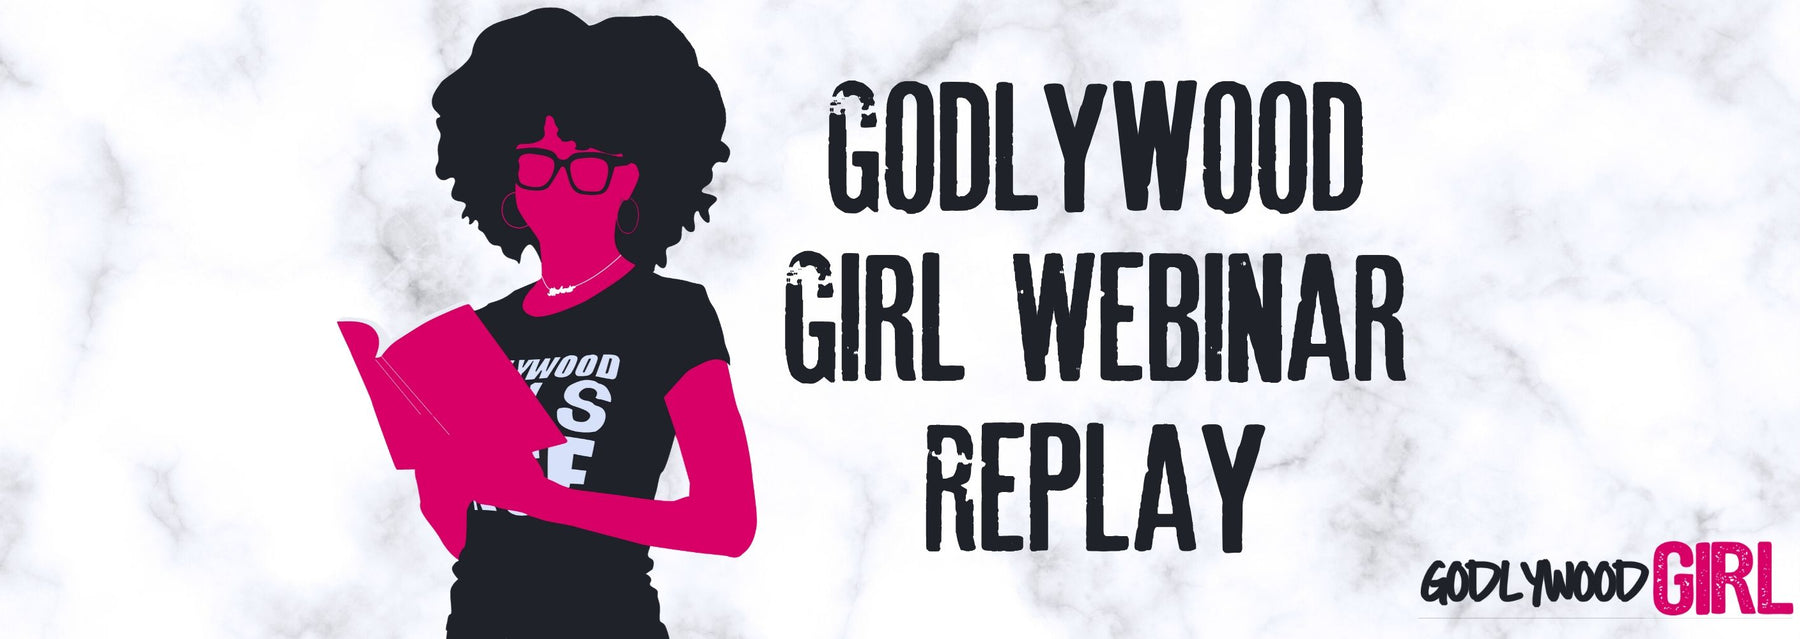 Godlywood Girl Entrepreneur Workshop - May 28, 2020 (Replay)